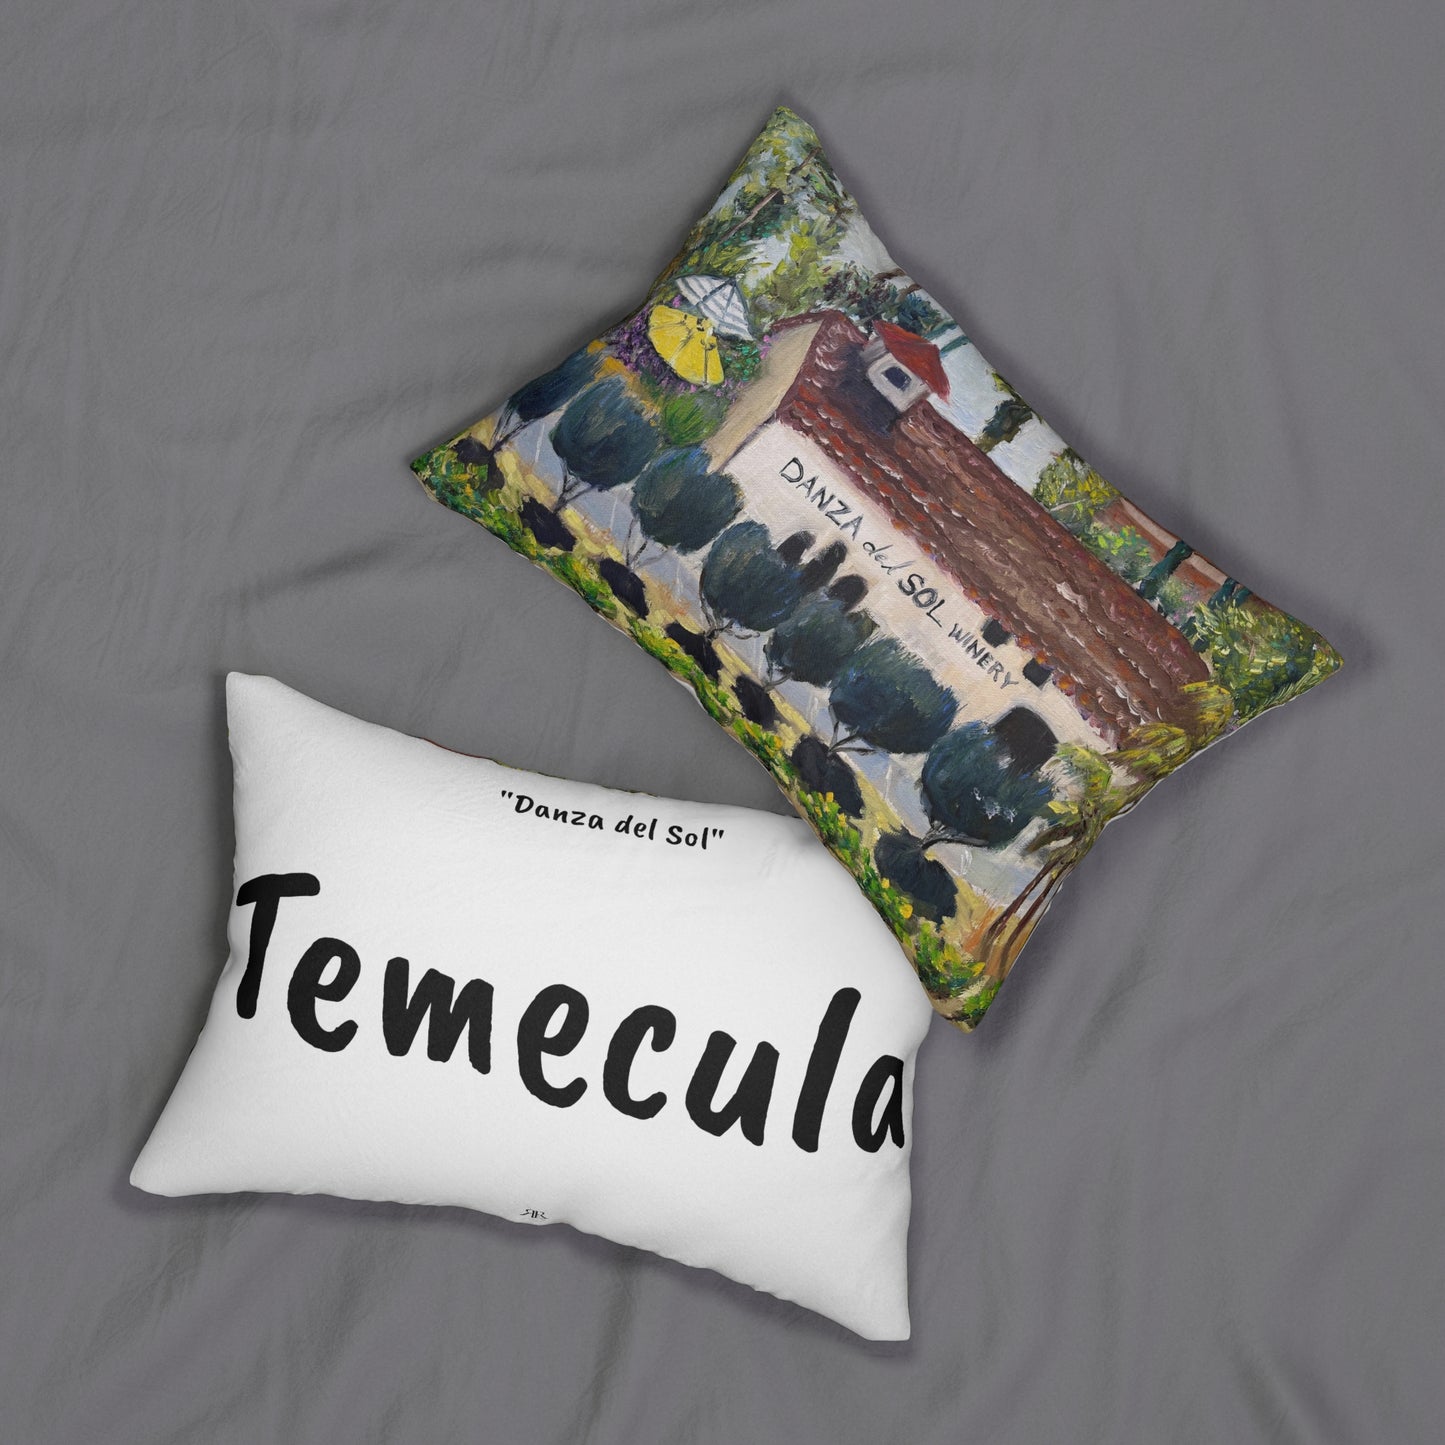 Oreiller lombaire Temecula avec peinture « Danza del Sol » et « Temecula »